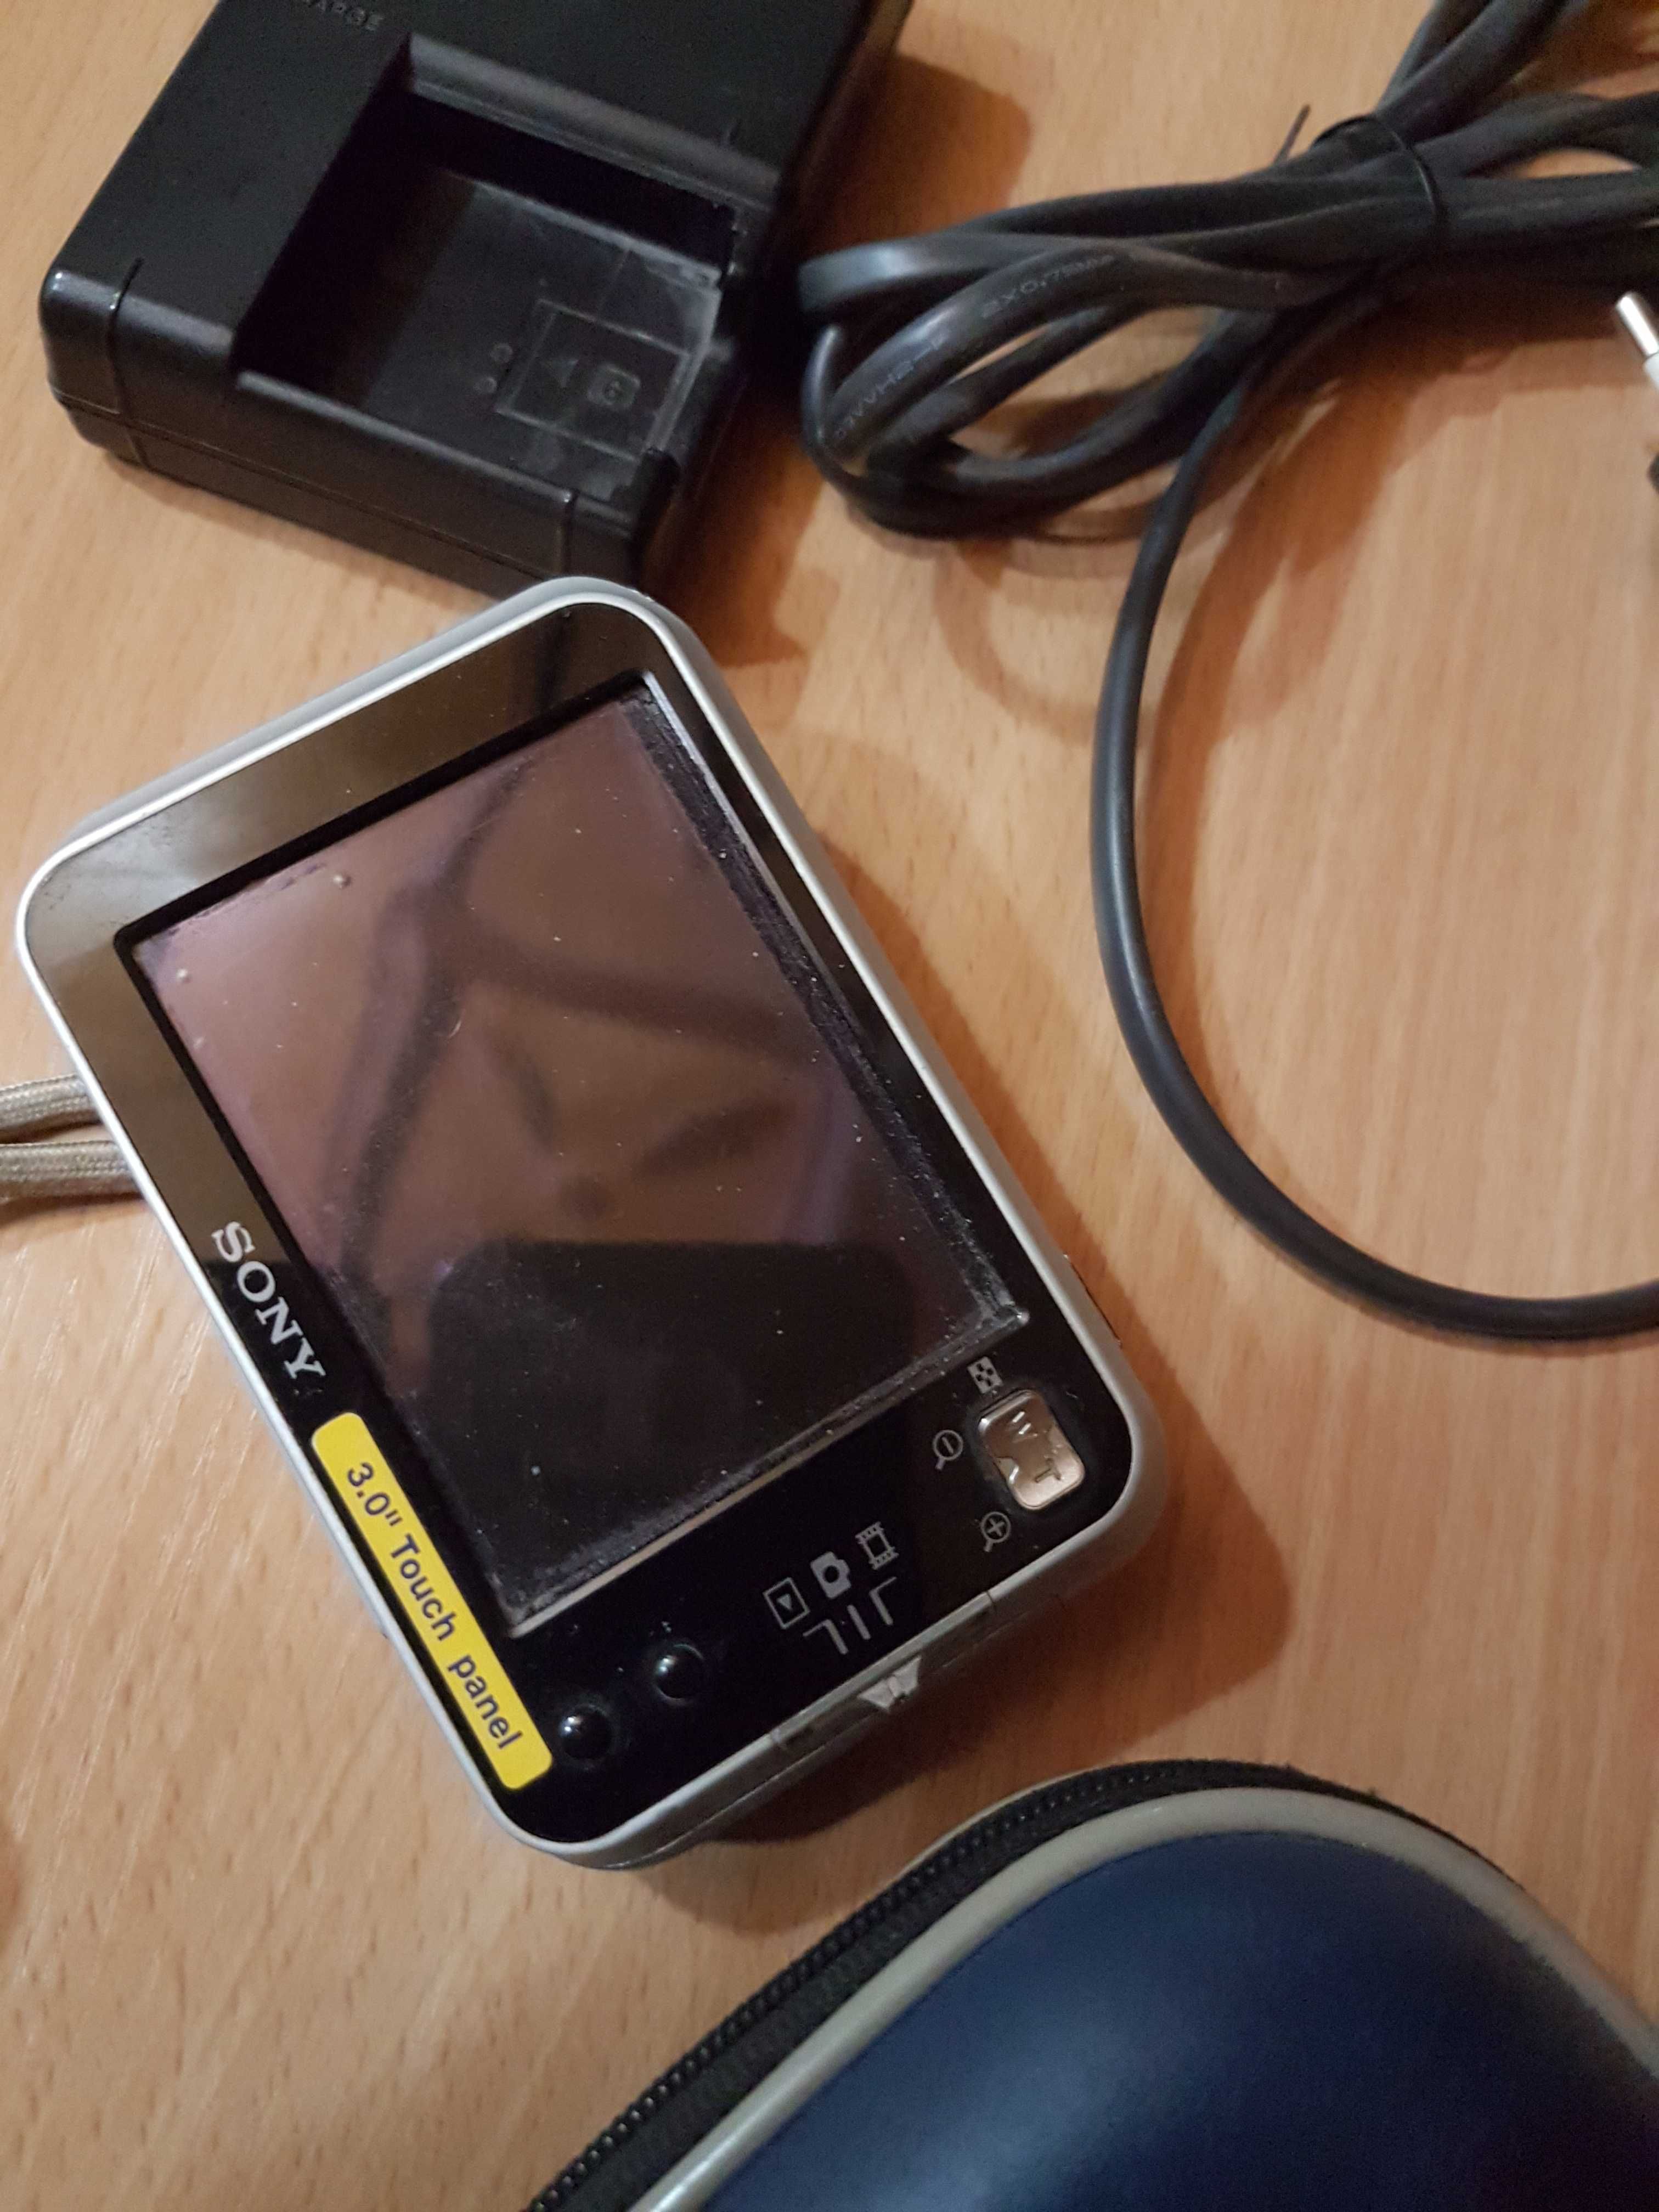 Sony DSC-N1 Cyber-shot Digital Camera ,8 MP